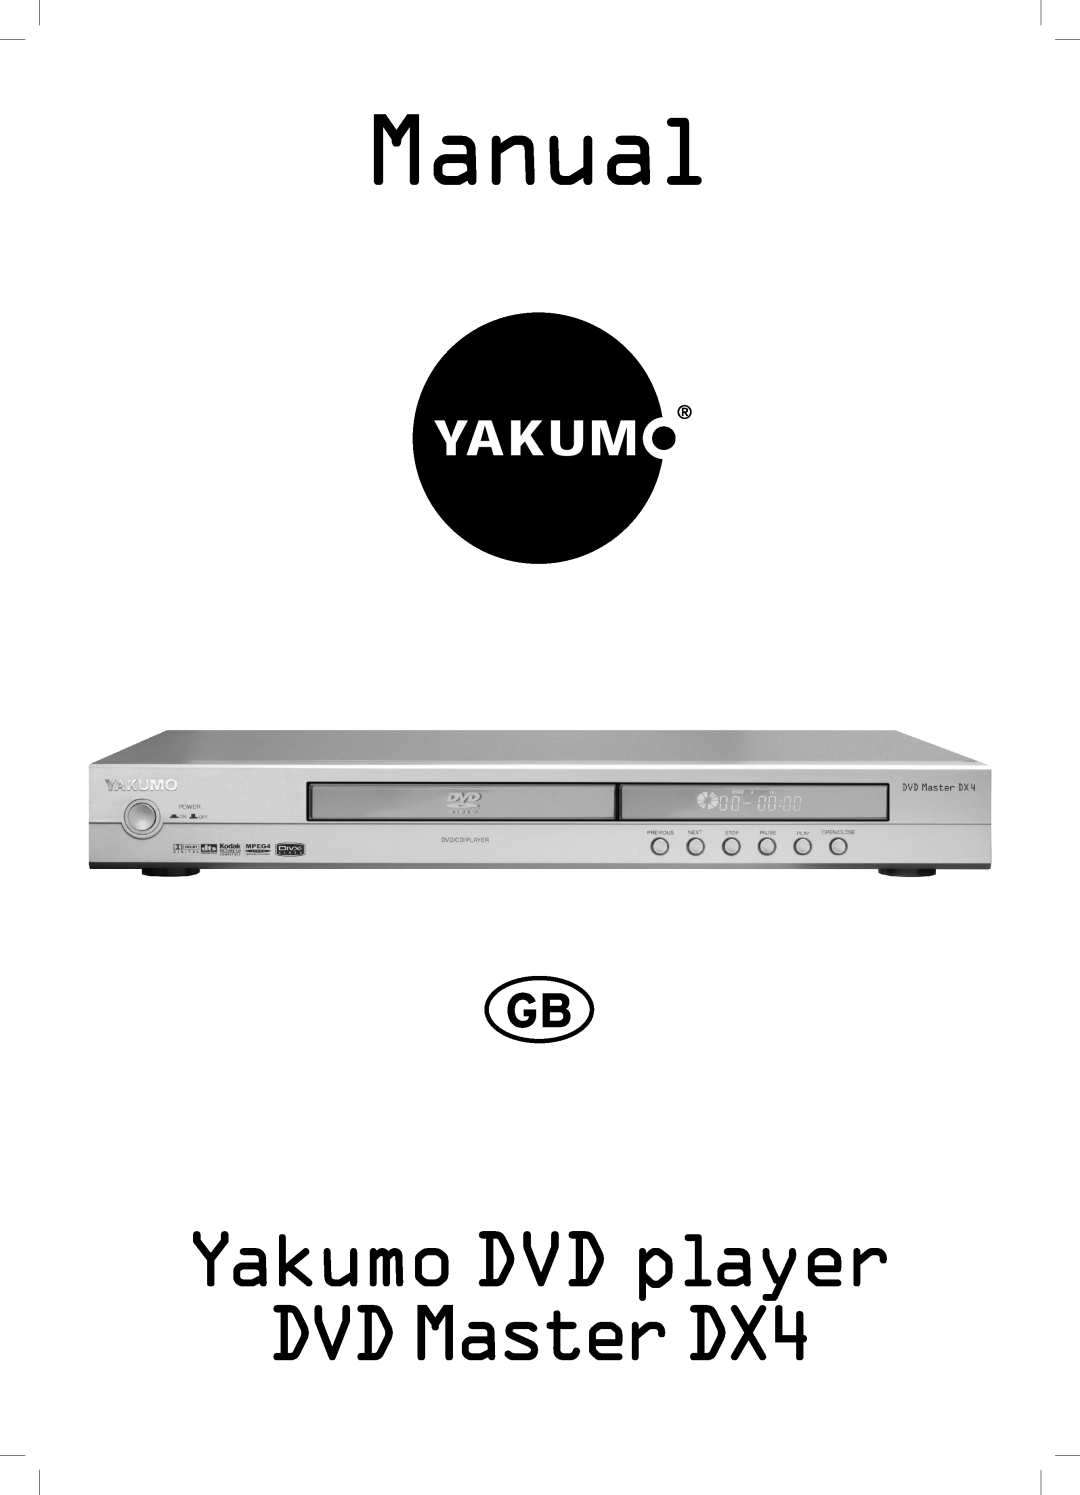 Dolby Laboratories manual Manual, Yakumo DVD player DVDMasterDX4 